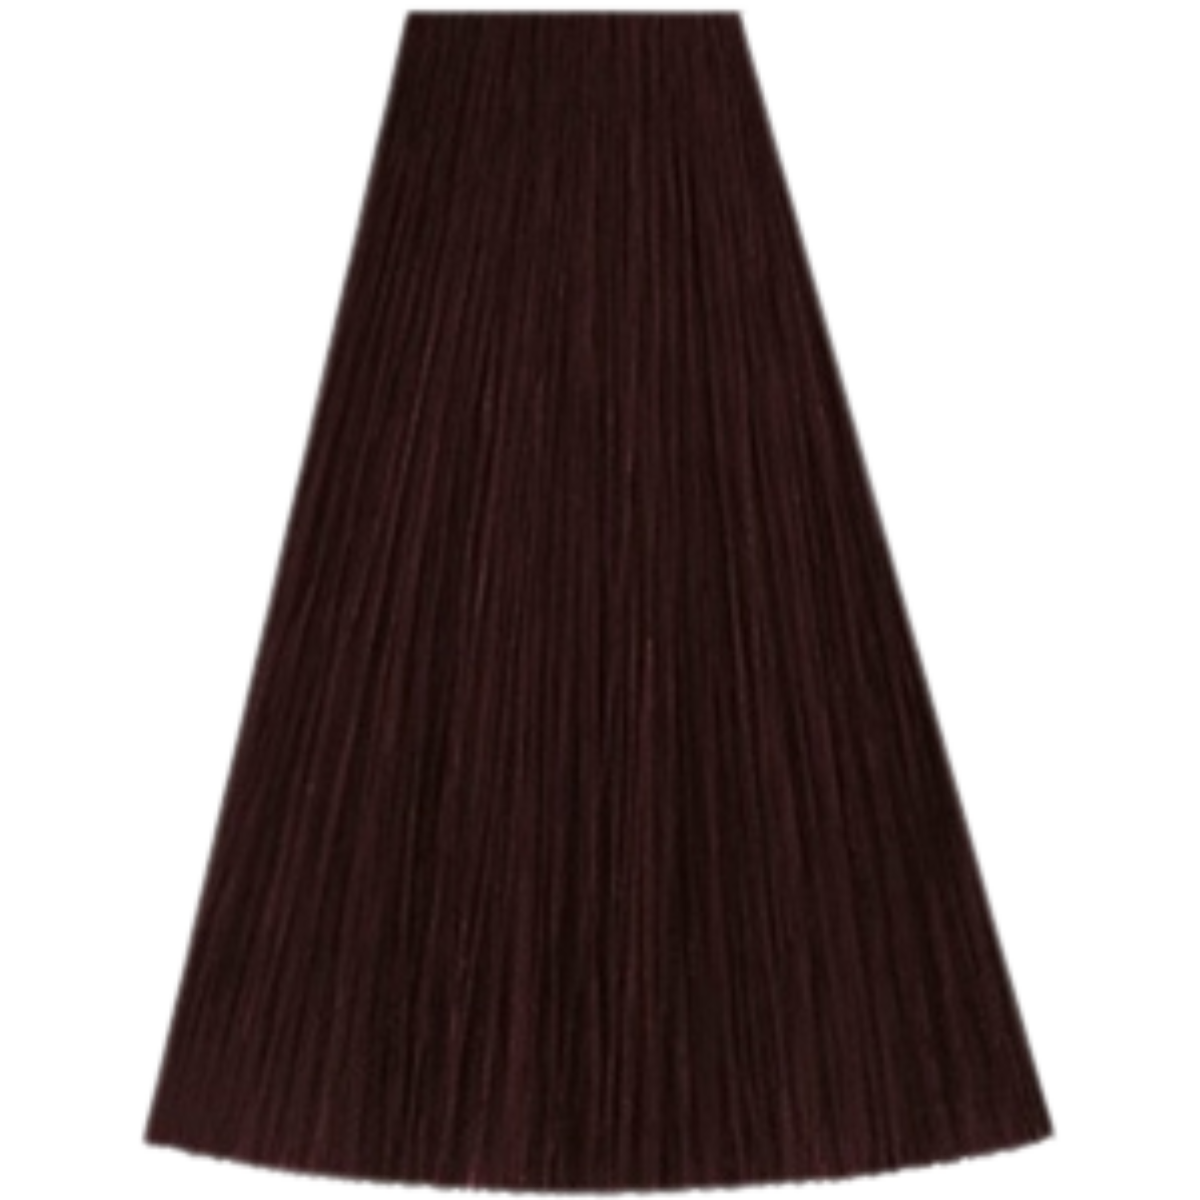 5/75 LIGHT BROWN BRUNETTE MAHOGANY קאדוס KADUS צבע לשיער 60 גרם